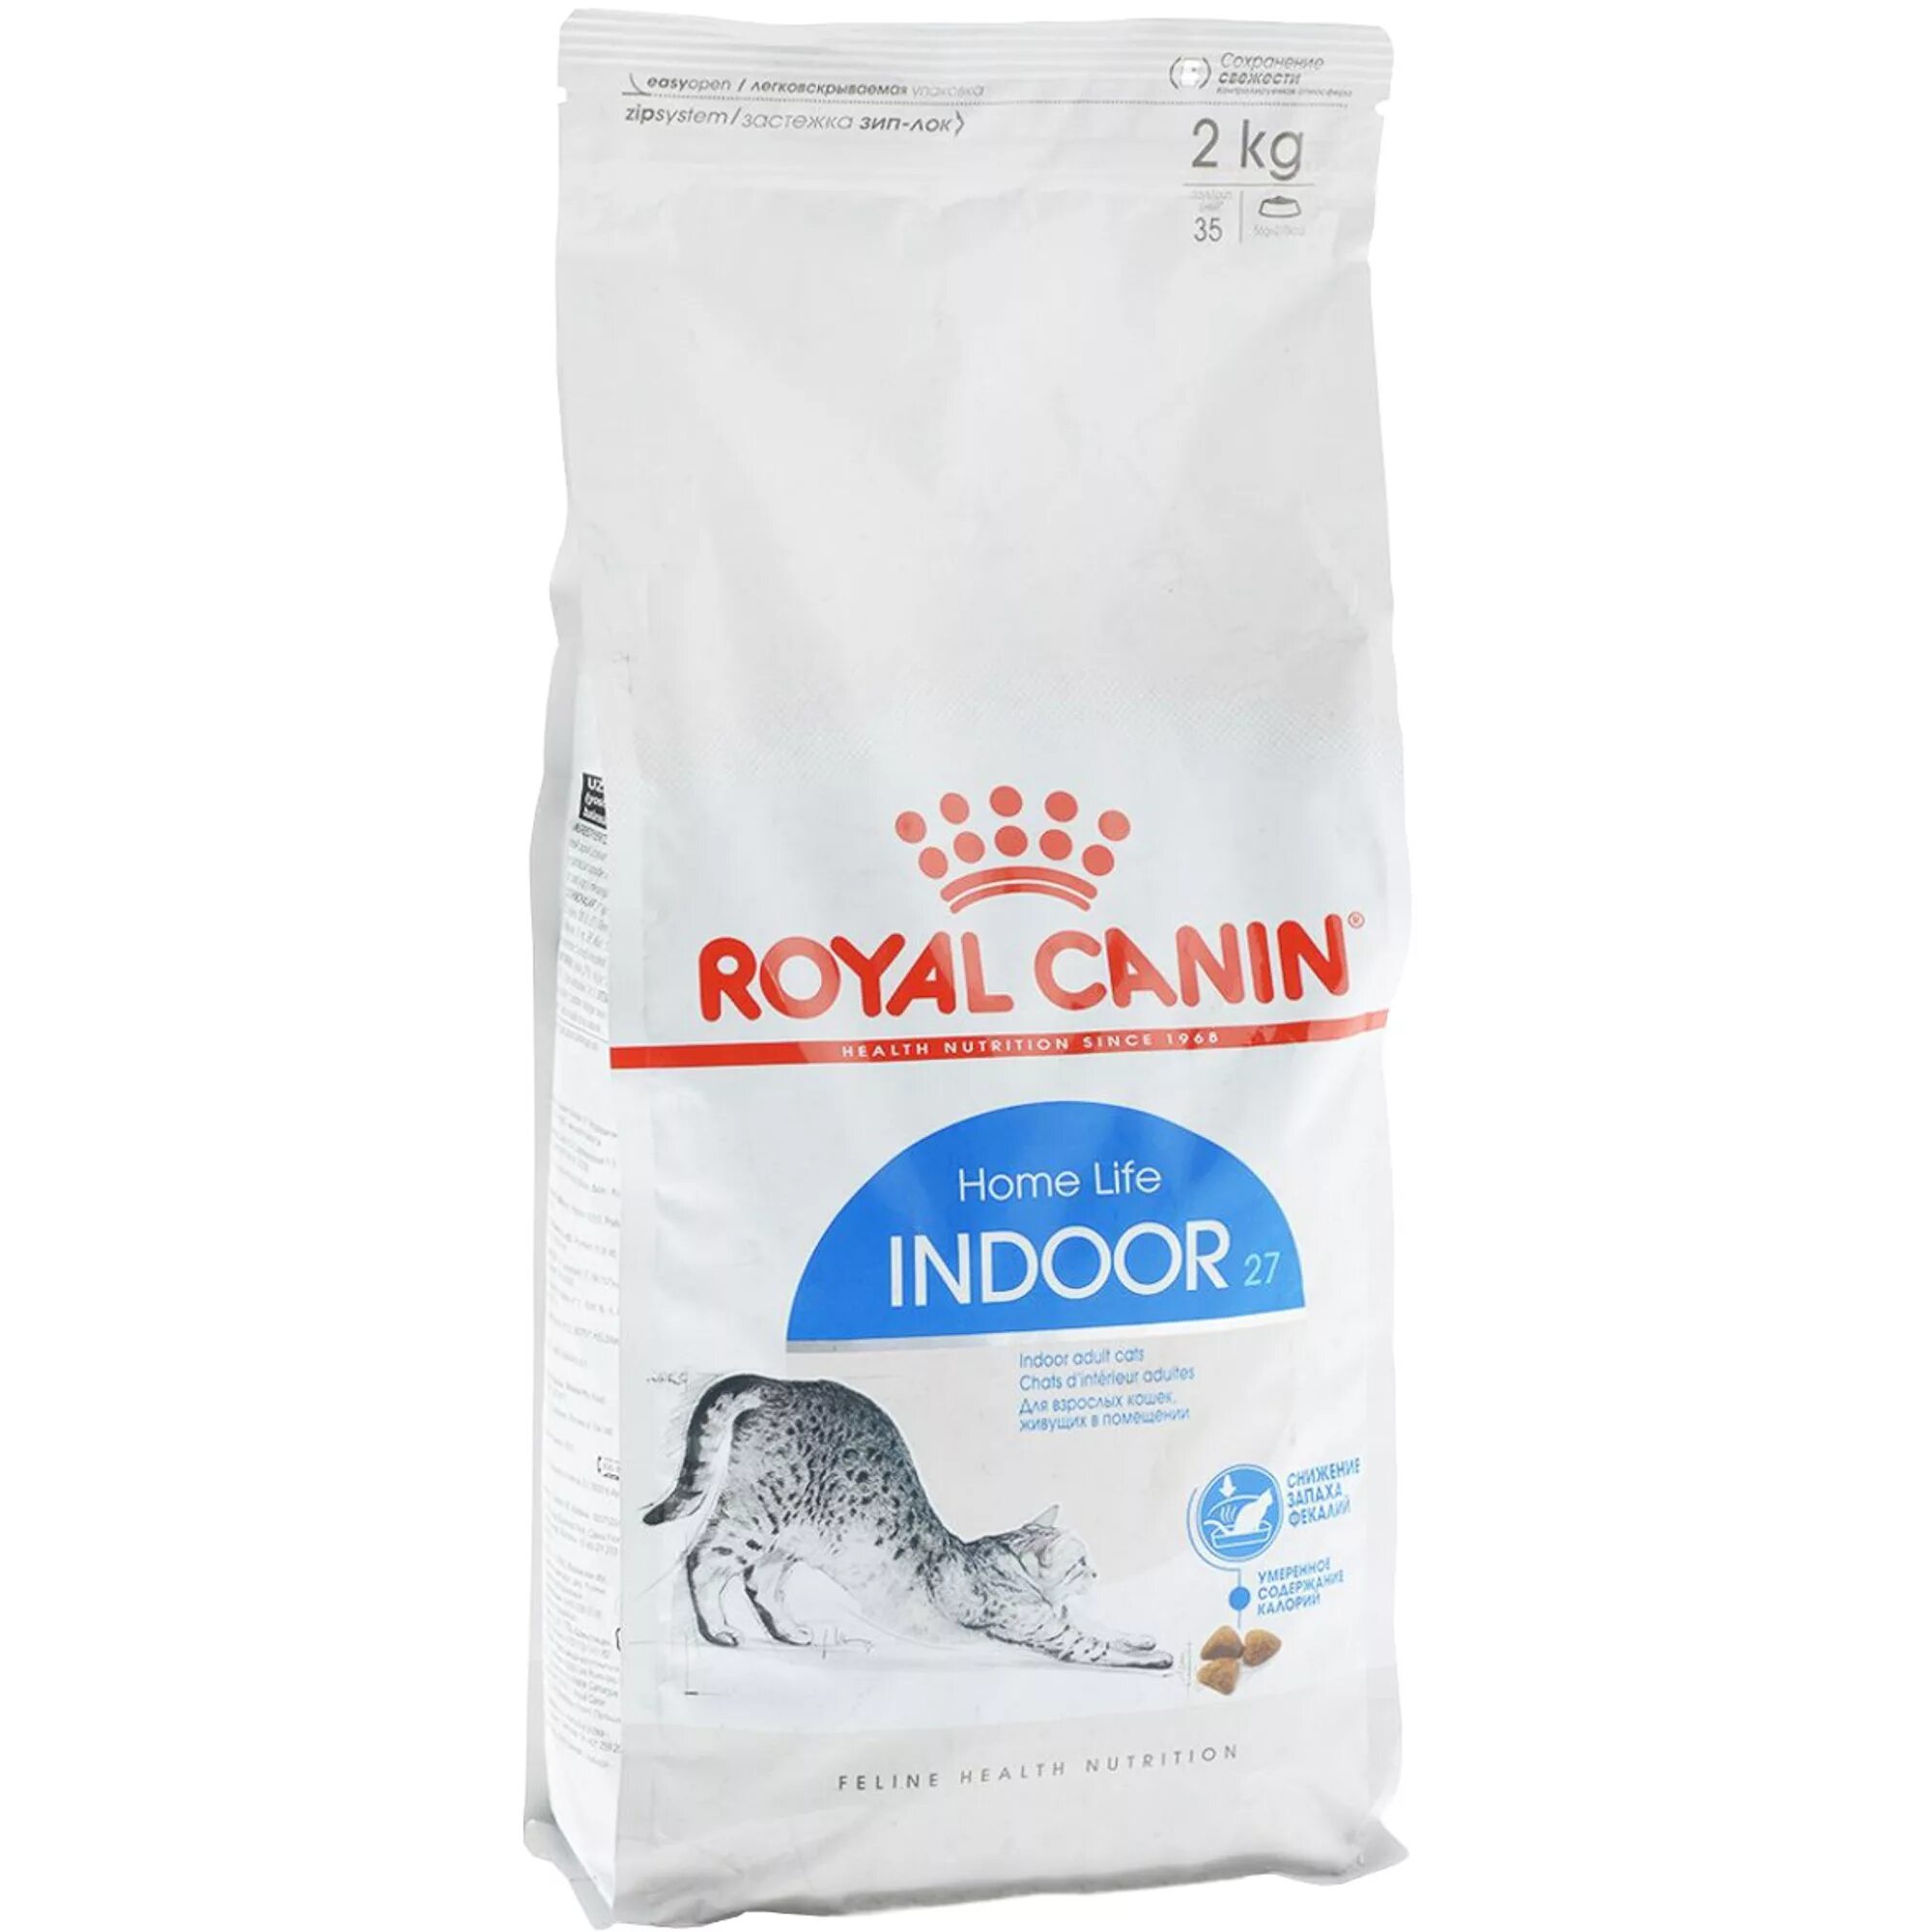 Royal canin для кошек 2кг. Роял Канин Индор. Royal Canin Indoor 27. Корм Роял Канин для кошек Индор. Роял Канин Индор 2 кг.